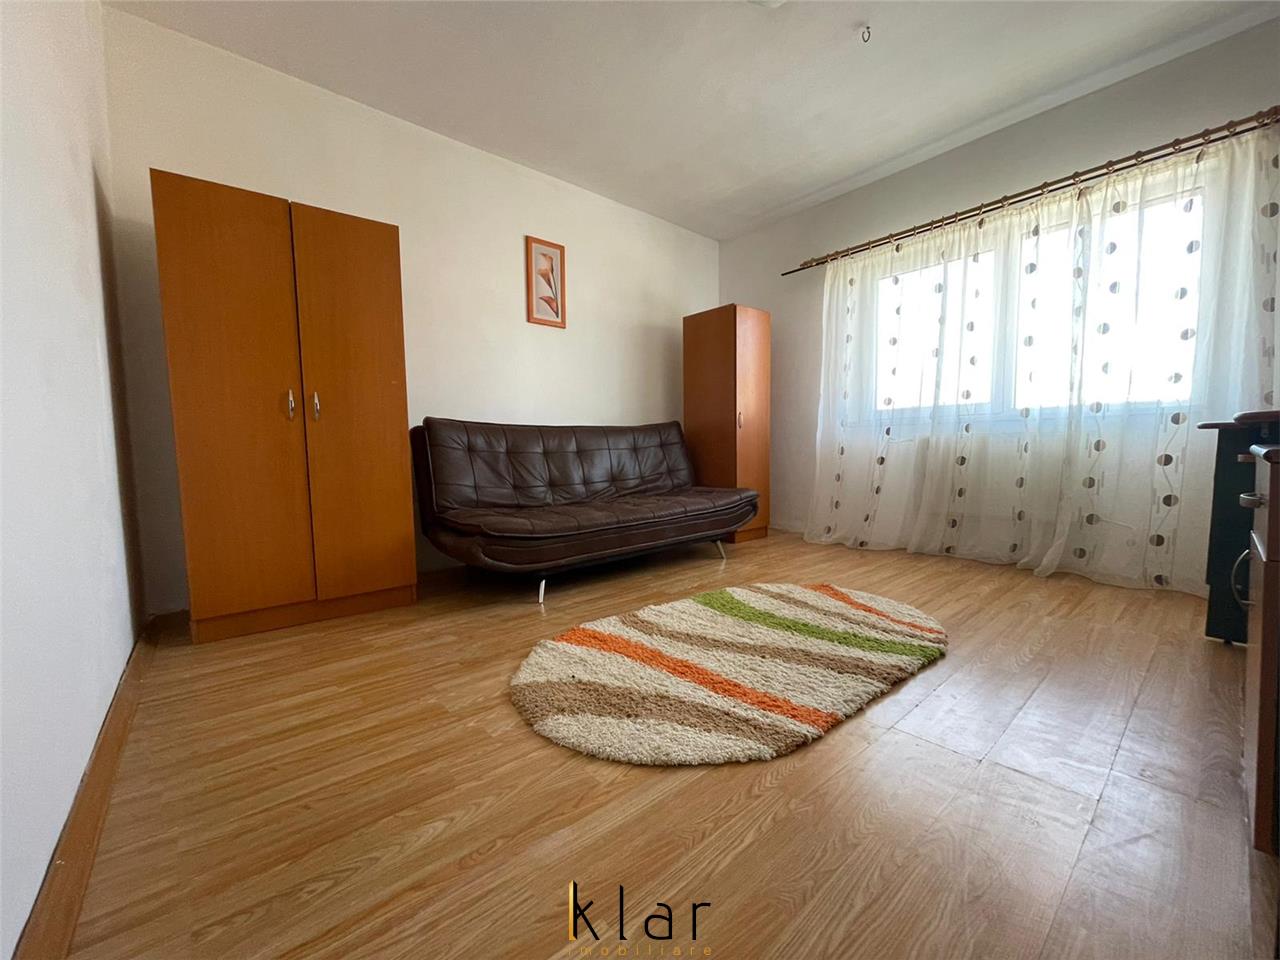 Apartament de vanzare 2 camere, decomadate pe strada Cetatii!